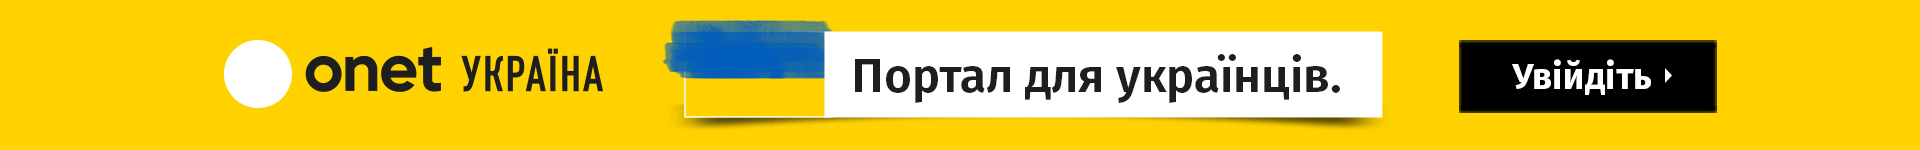 Onet Ukraine - портал для українців